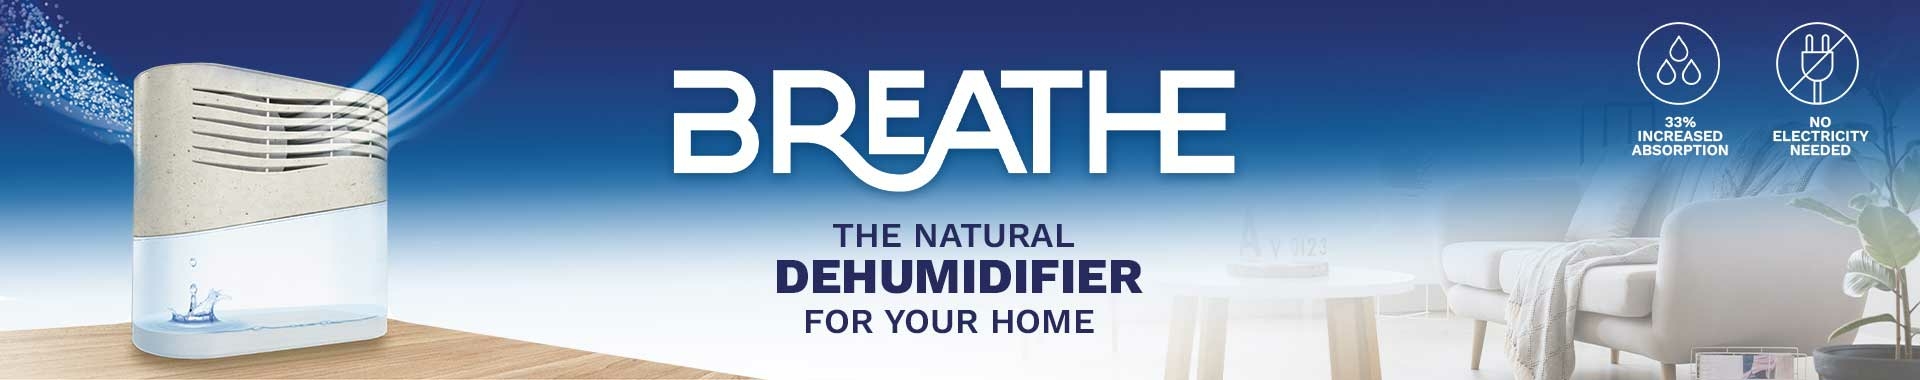 diy bostik uk dehumidifier breathe banner desktop